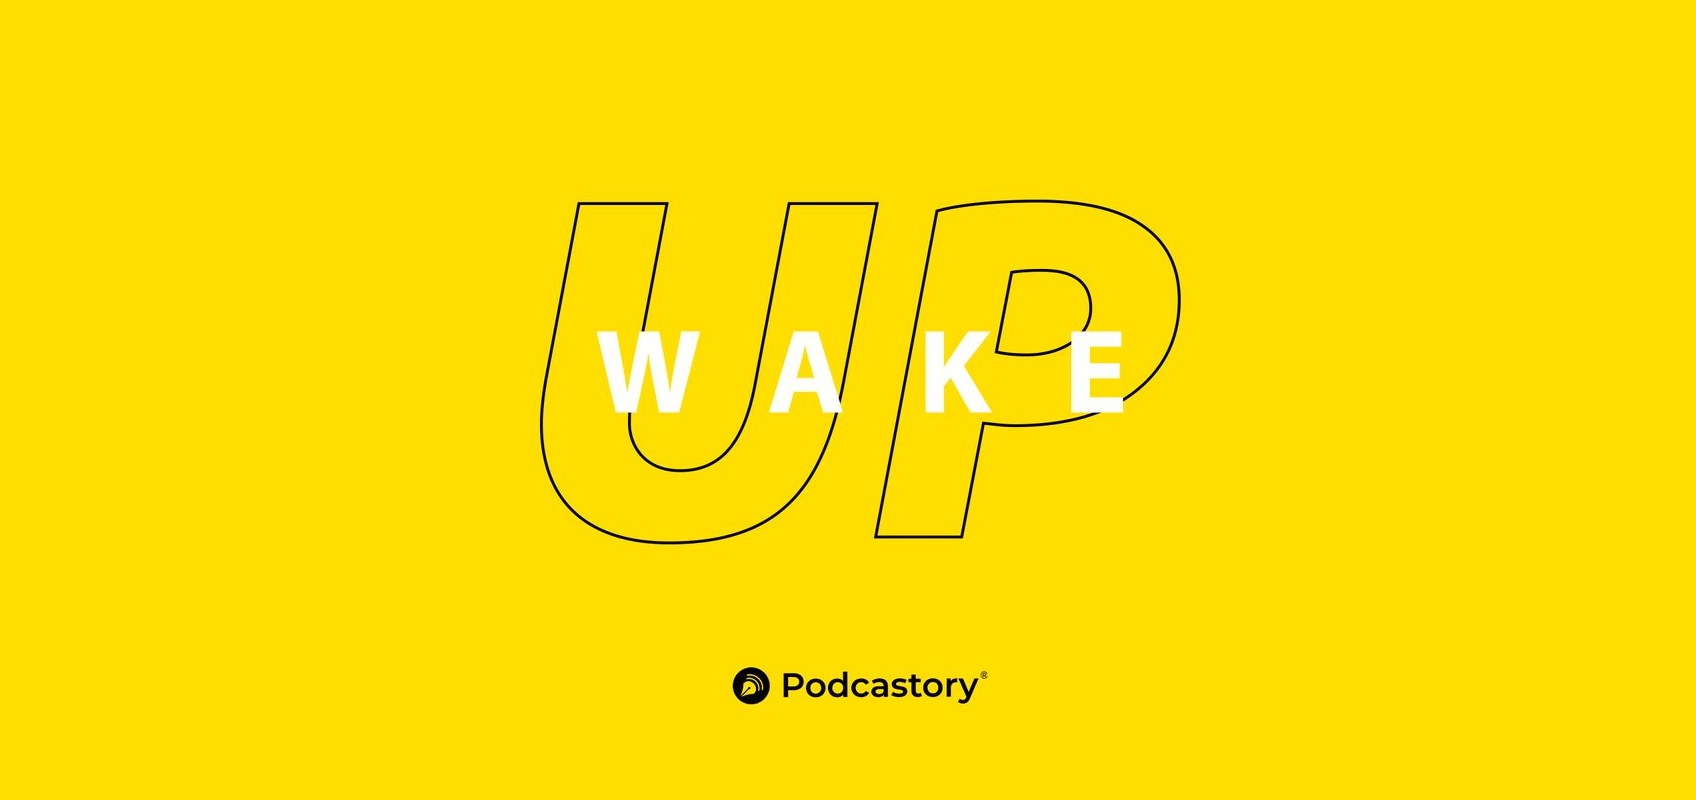 Wake up - podcast